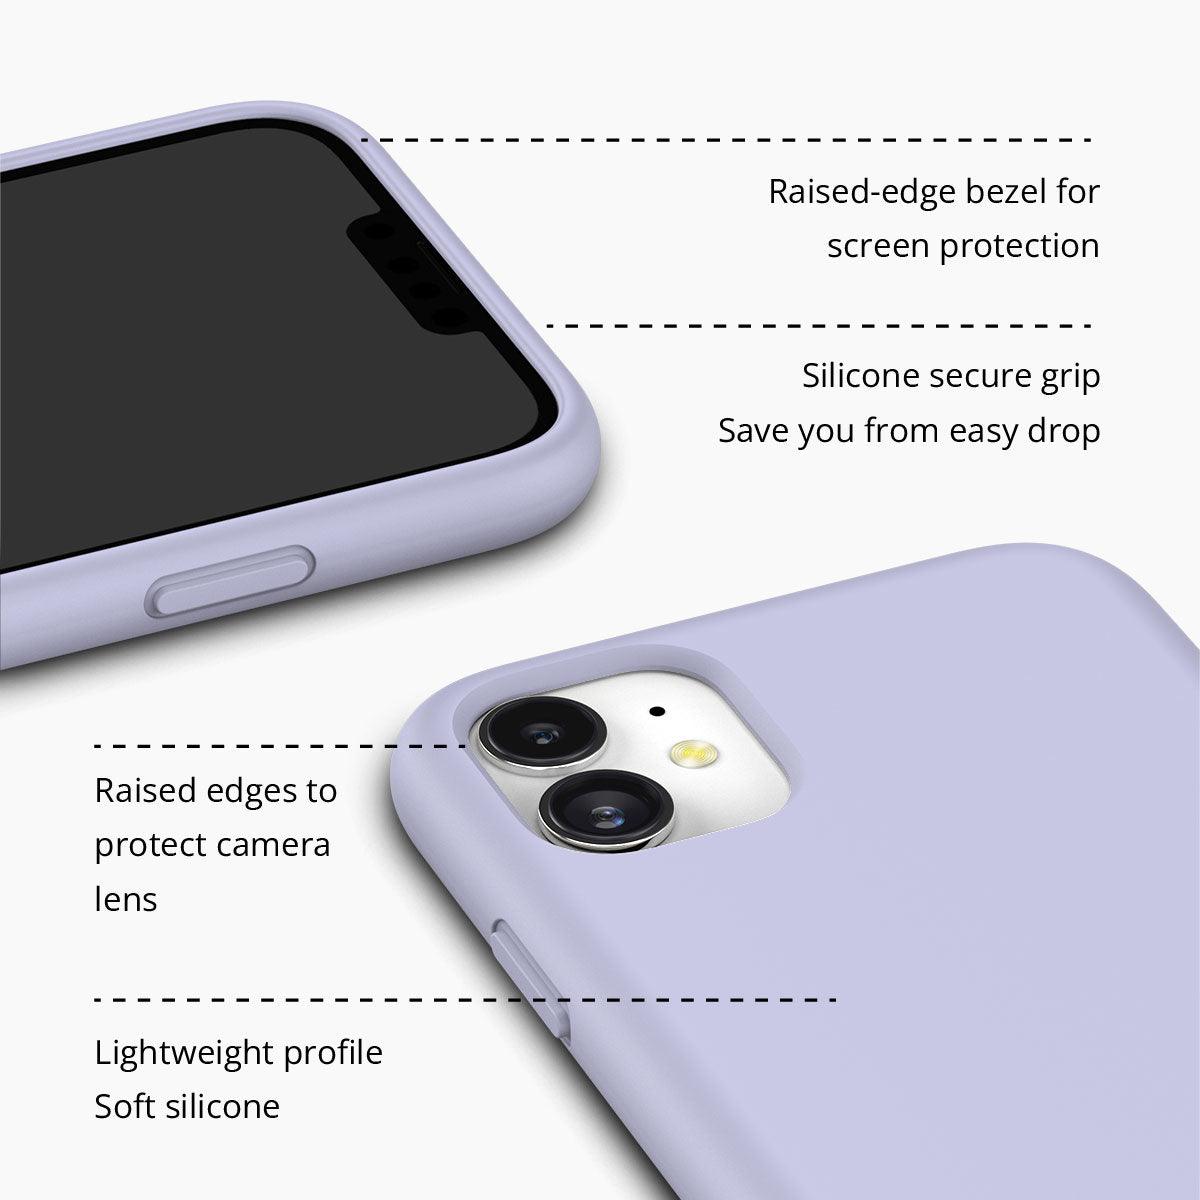 iPhone 11 Lady Lavender Silicone Phone Case - CORECOLOUR